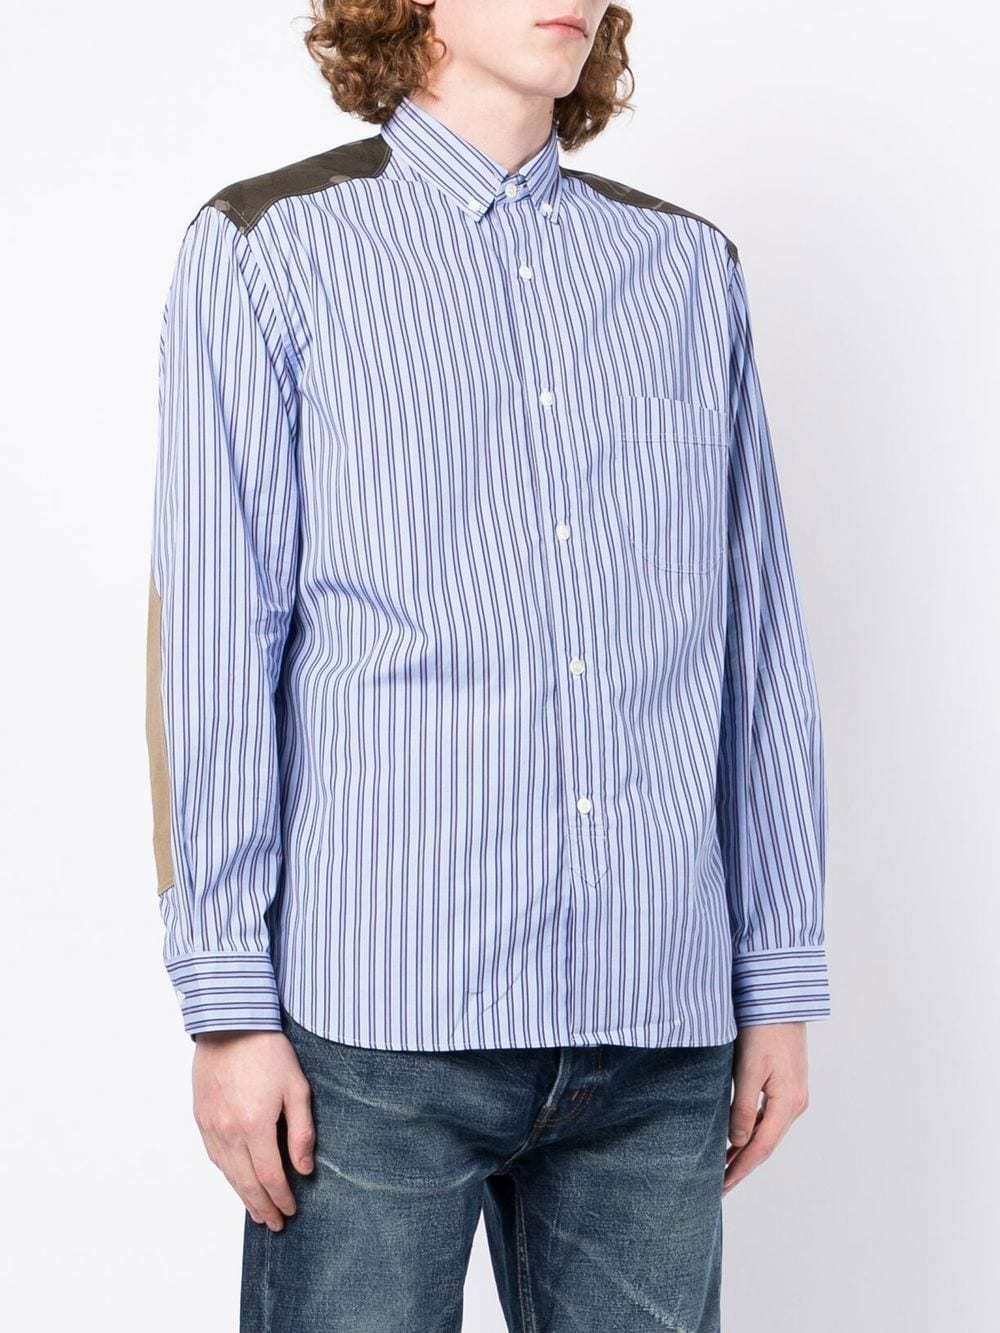 Junya Watanabe MAN Striped Button Down Shirt, $399 | farfetch.com ...